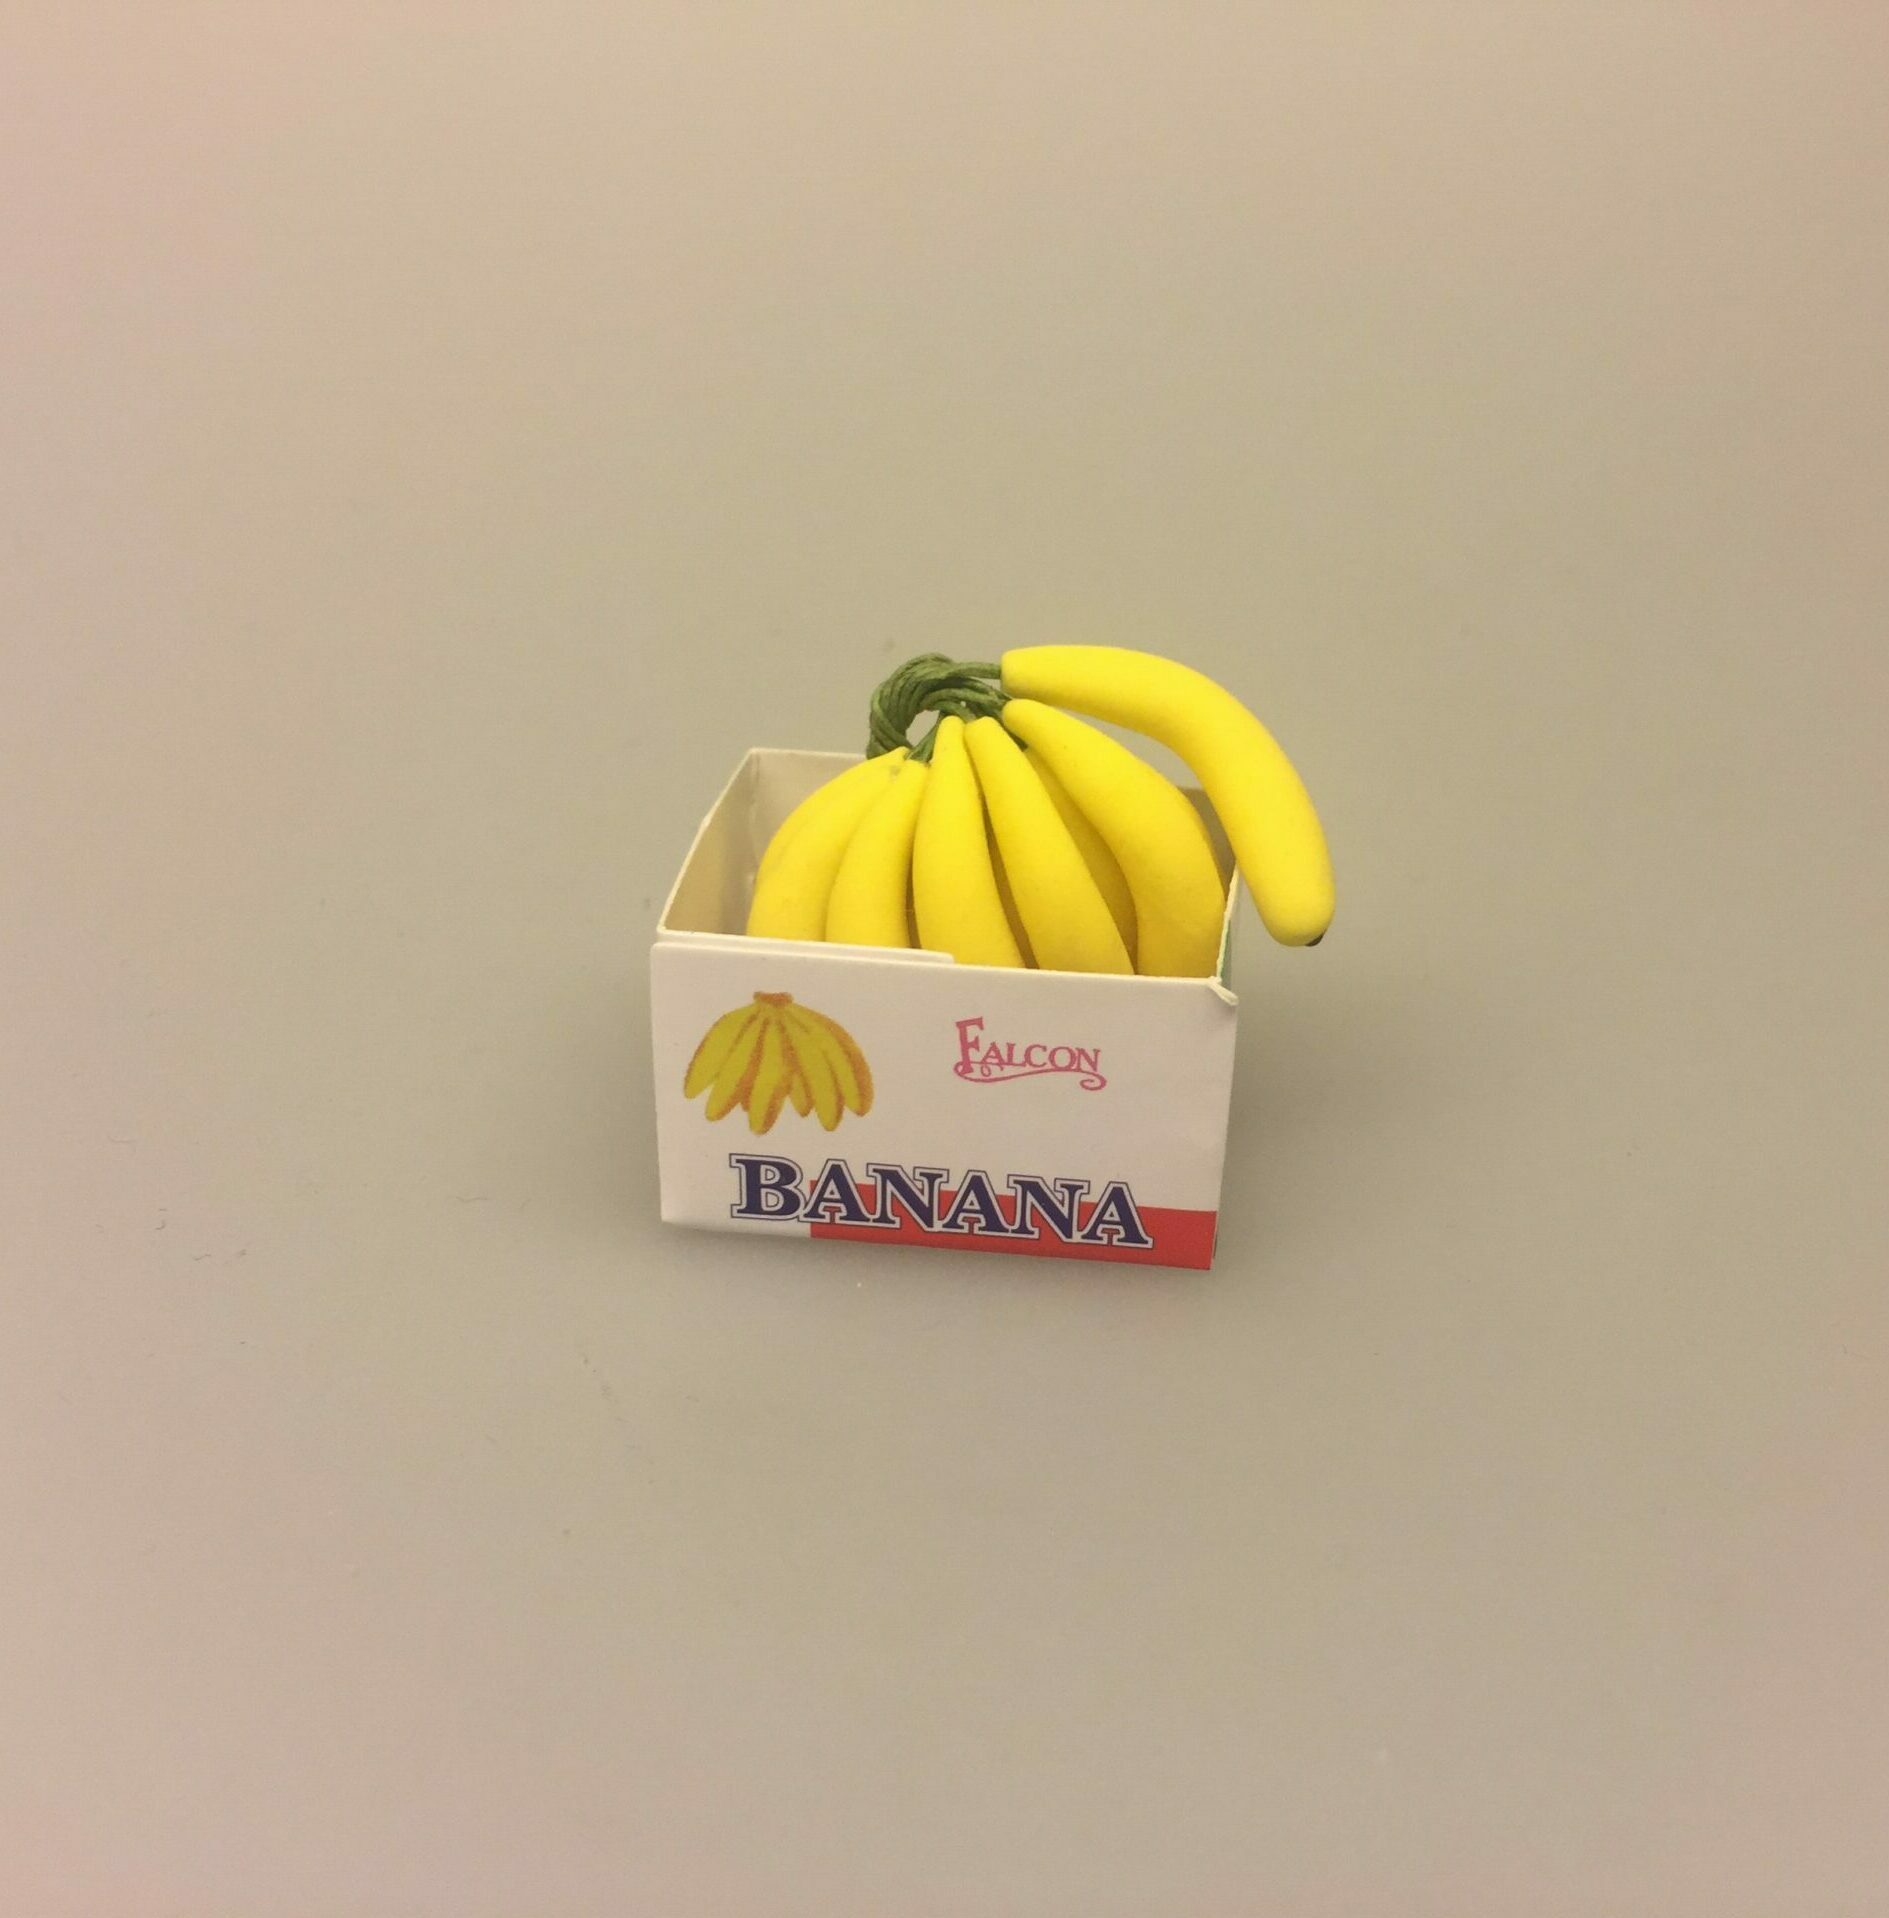 Miniature Kasse med bananer, banana, banankasse, bananklase, modne bananer, frugt, frugtkasse, dukkehus, dukkehusting, dukker, dukkestørrelse, mini, miniature, miniaturer, samler, 1:12, skala, legemad, biti, ribe, køb bananer,